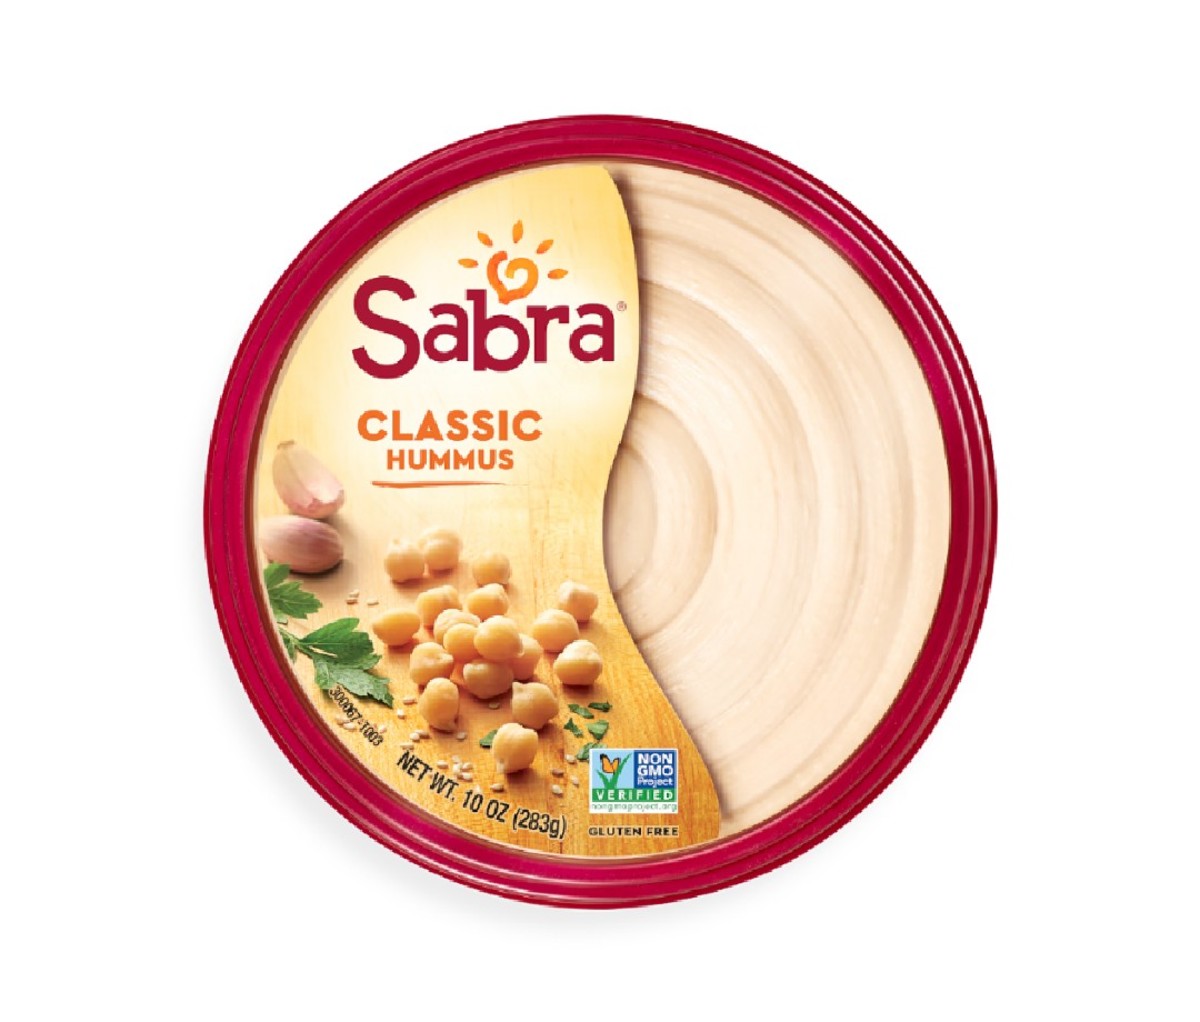 Sabra Hummus Classic Hummus and Guacamole